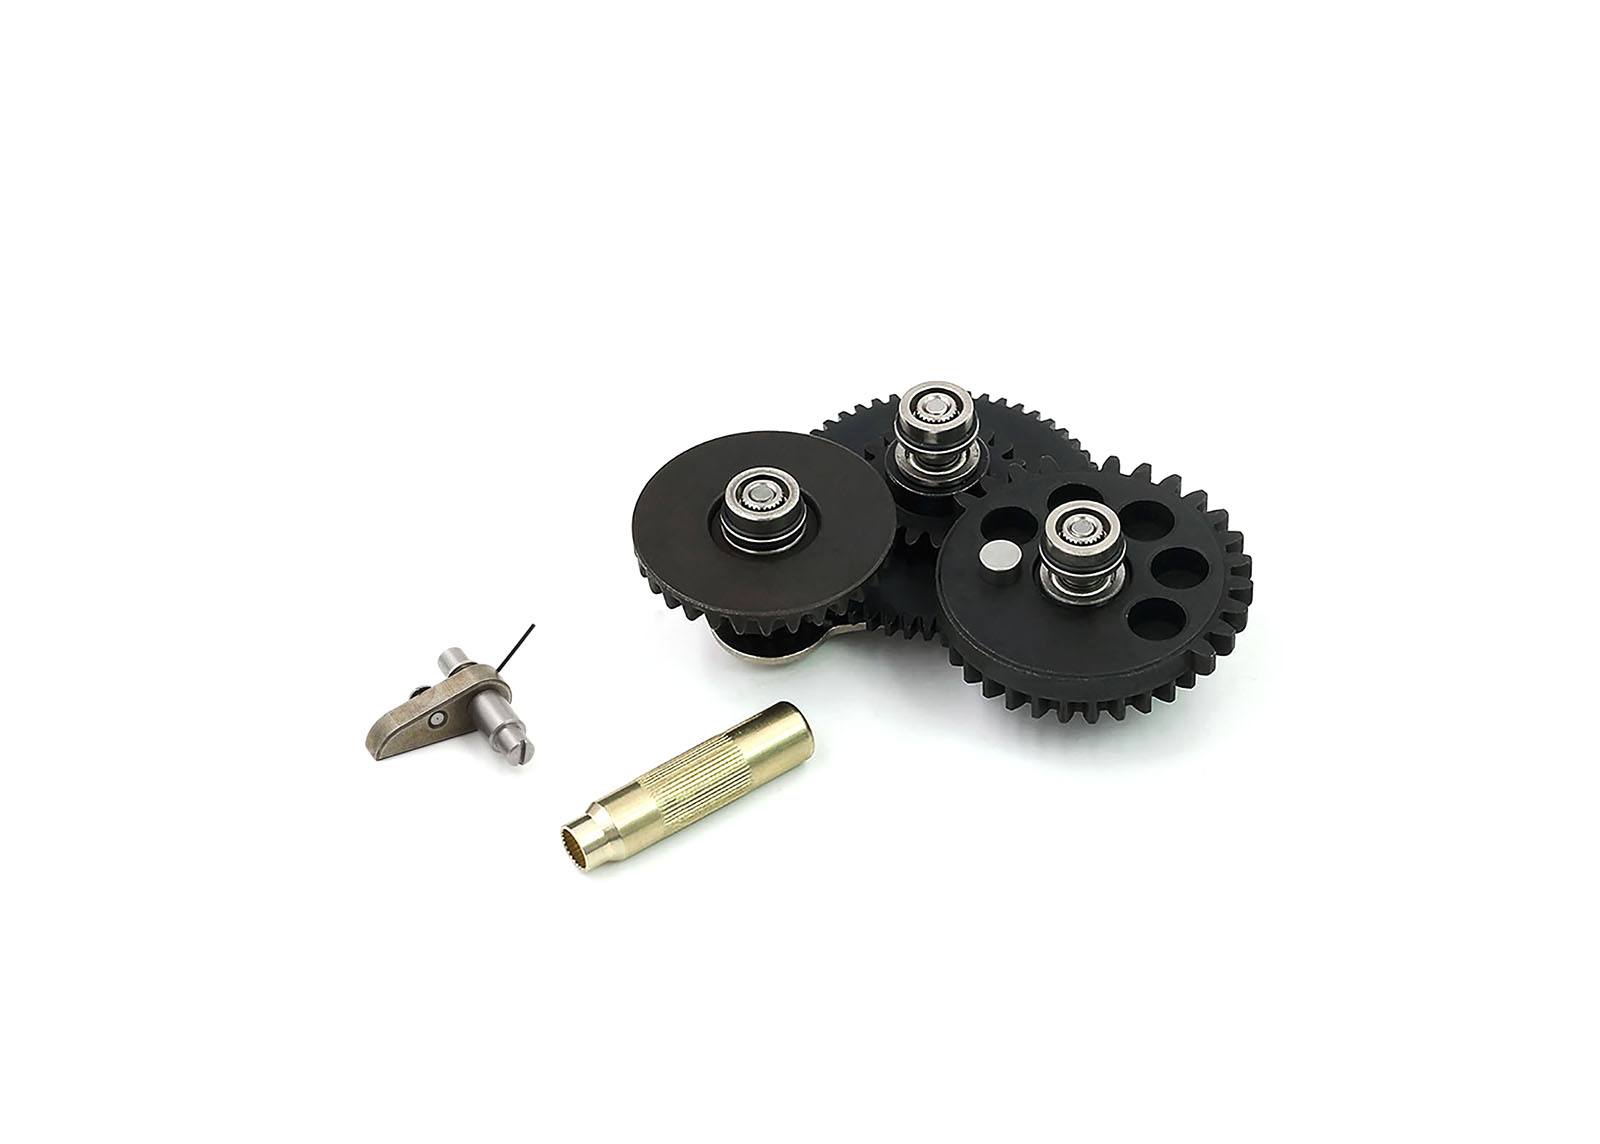 Modular Gear Set - SMOOTH 6mm Ver.2/Ver.3 (NanoTorque 22.2:1+Gear Key) - Modify Airsoft parts